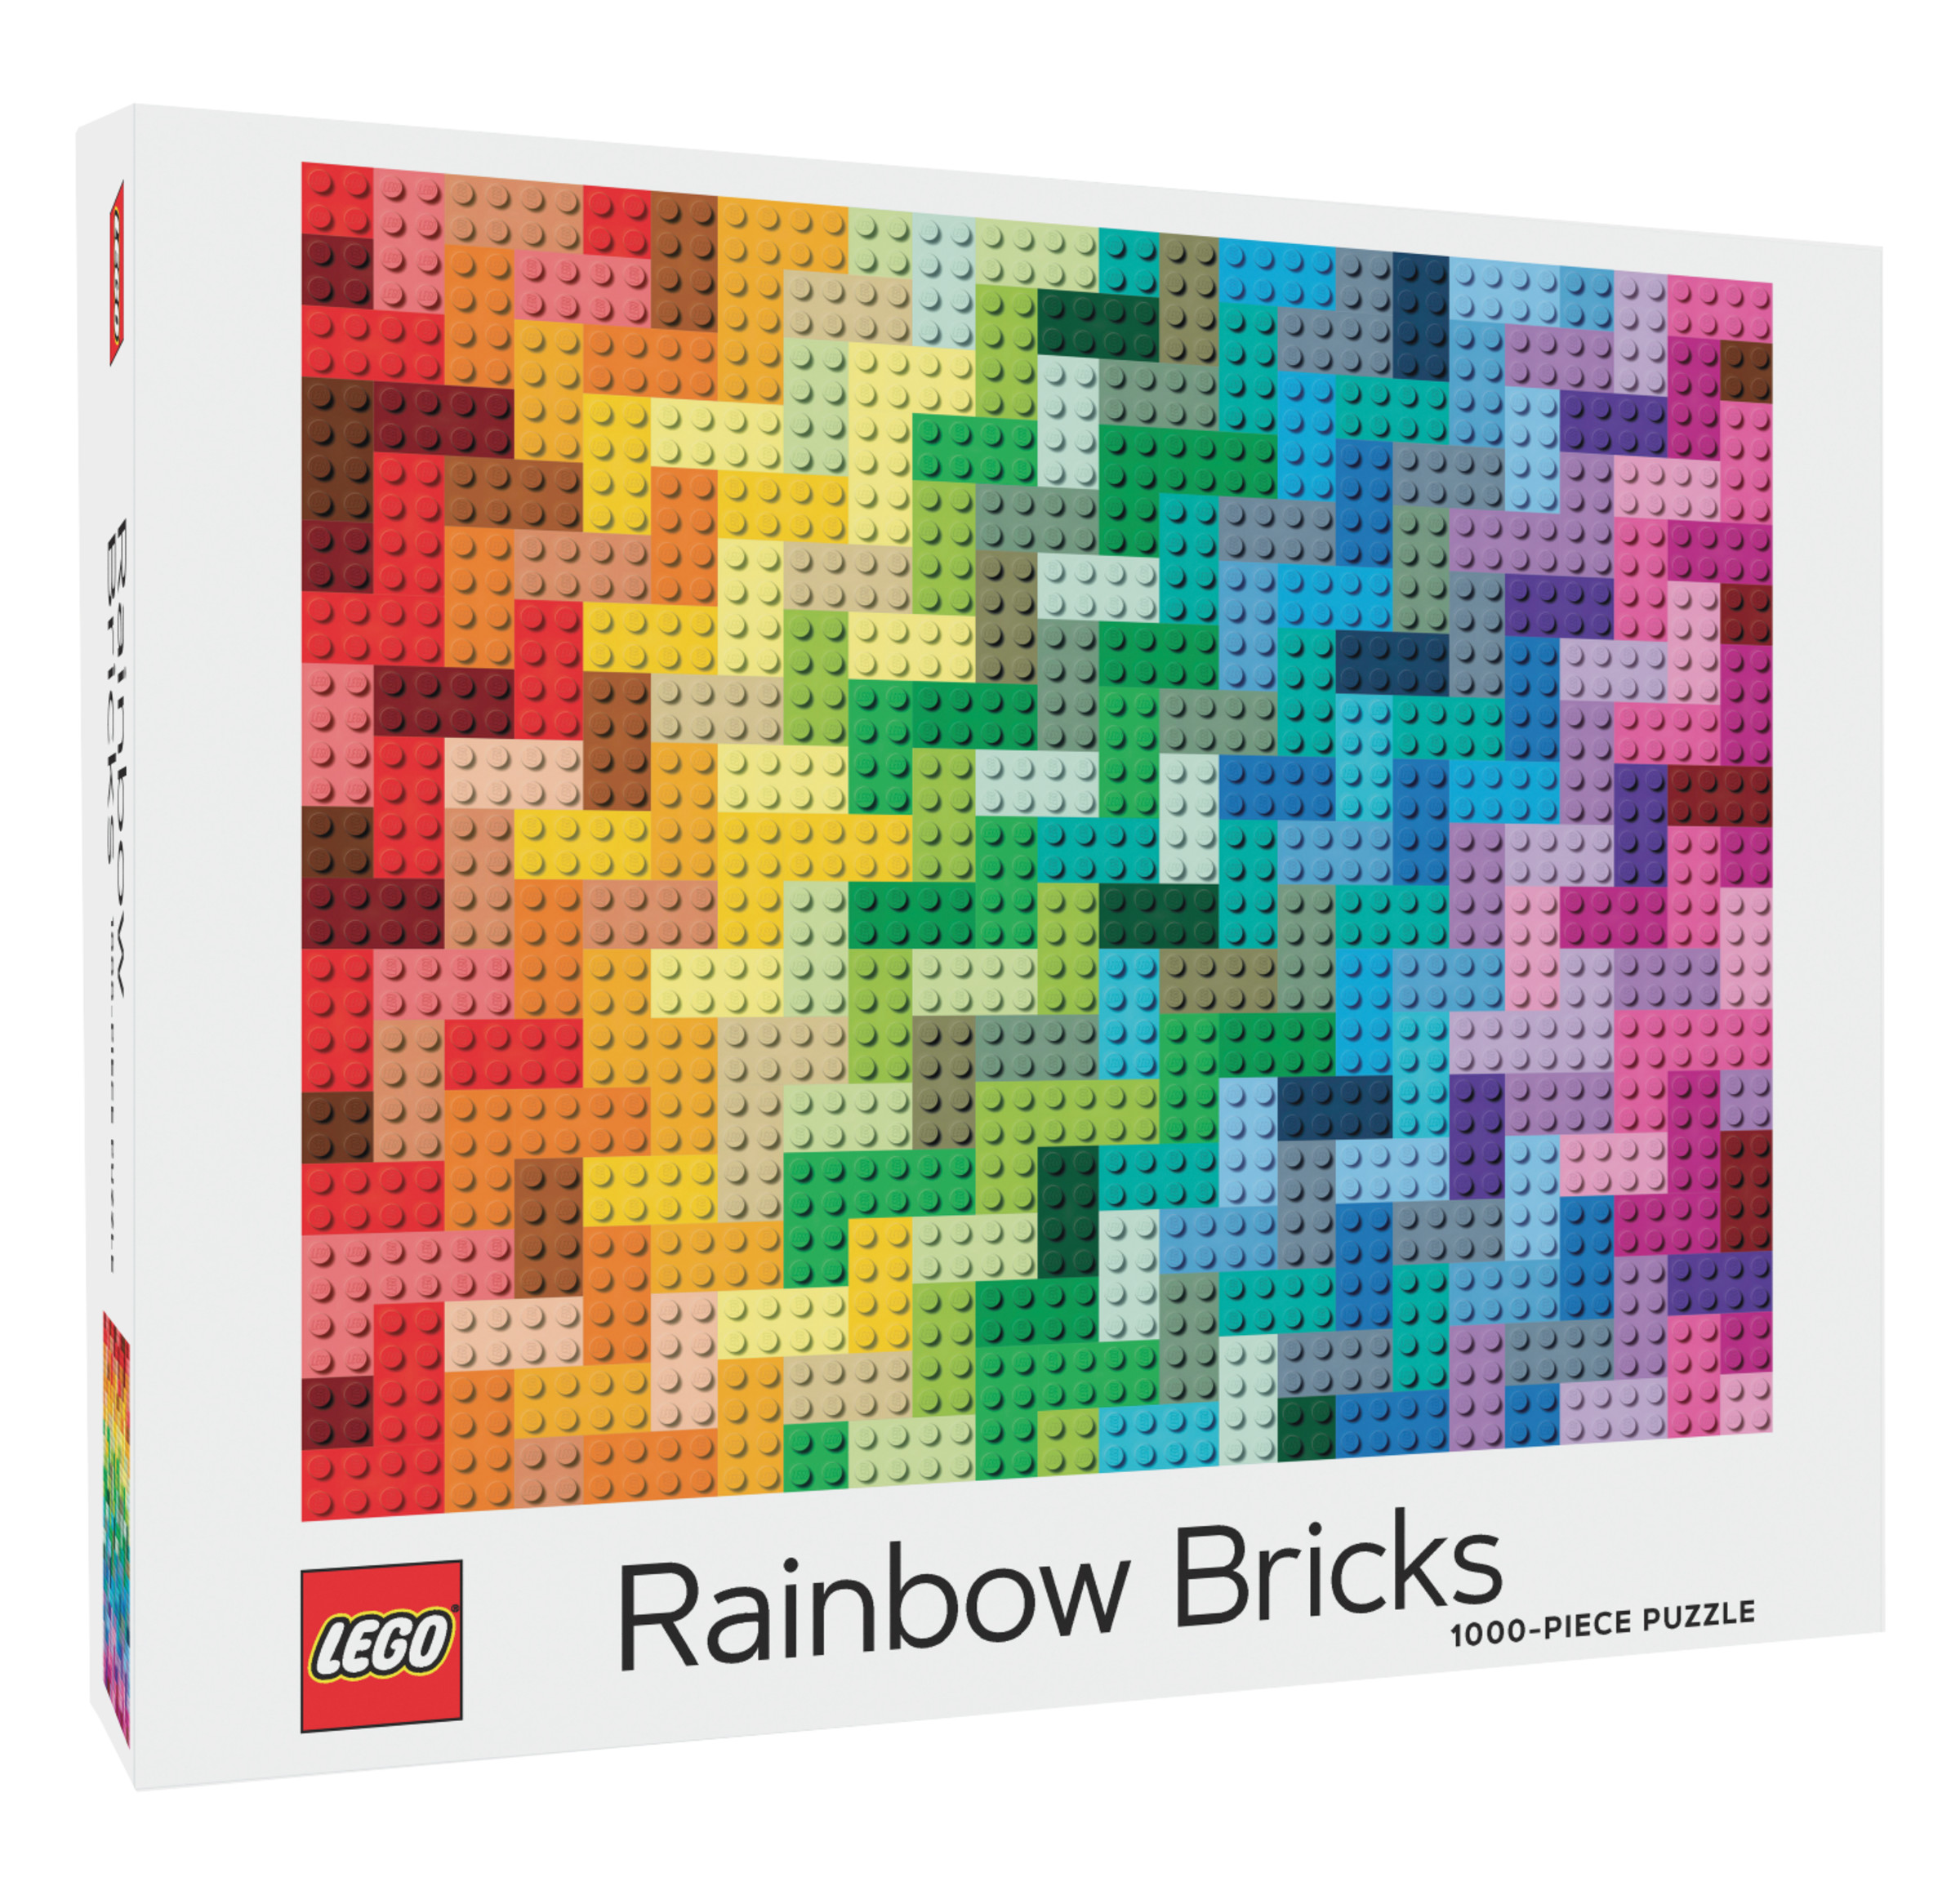 Casse-tête 1000 - LEGO Rainbow Bricks Puzzle | Casse-têtes